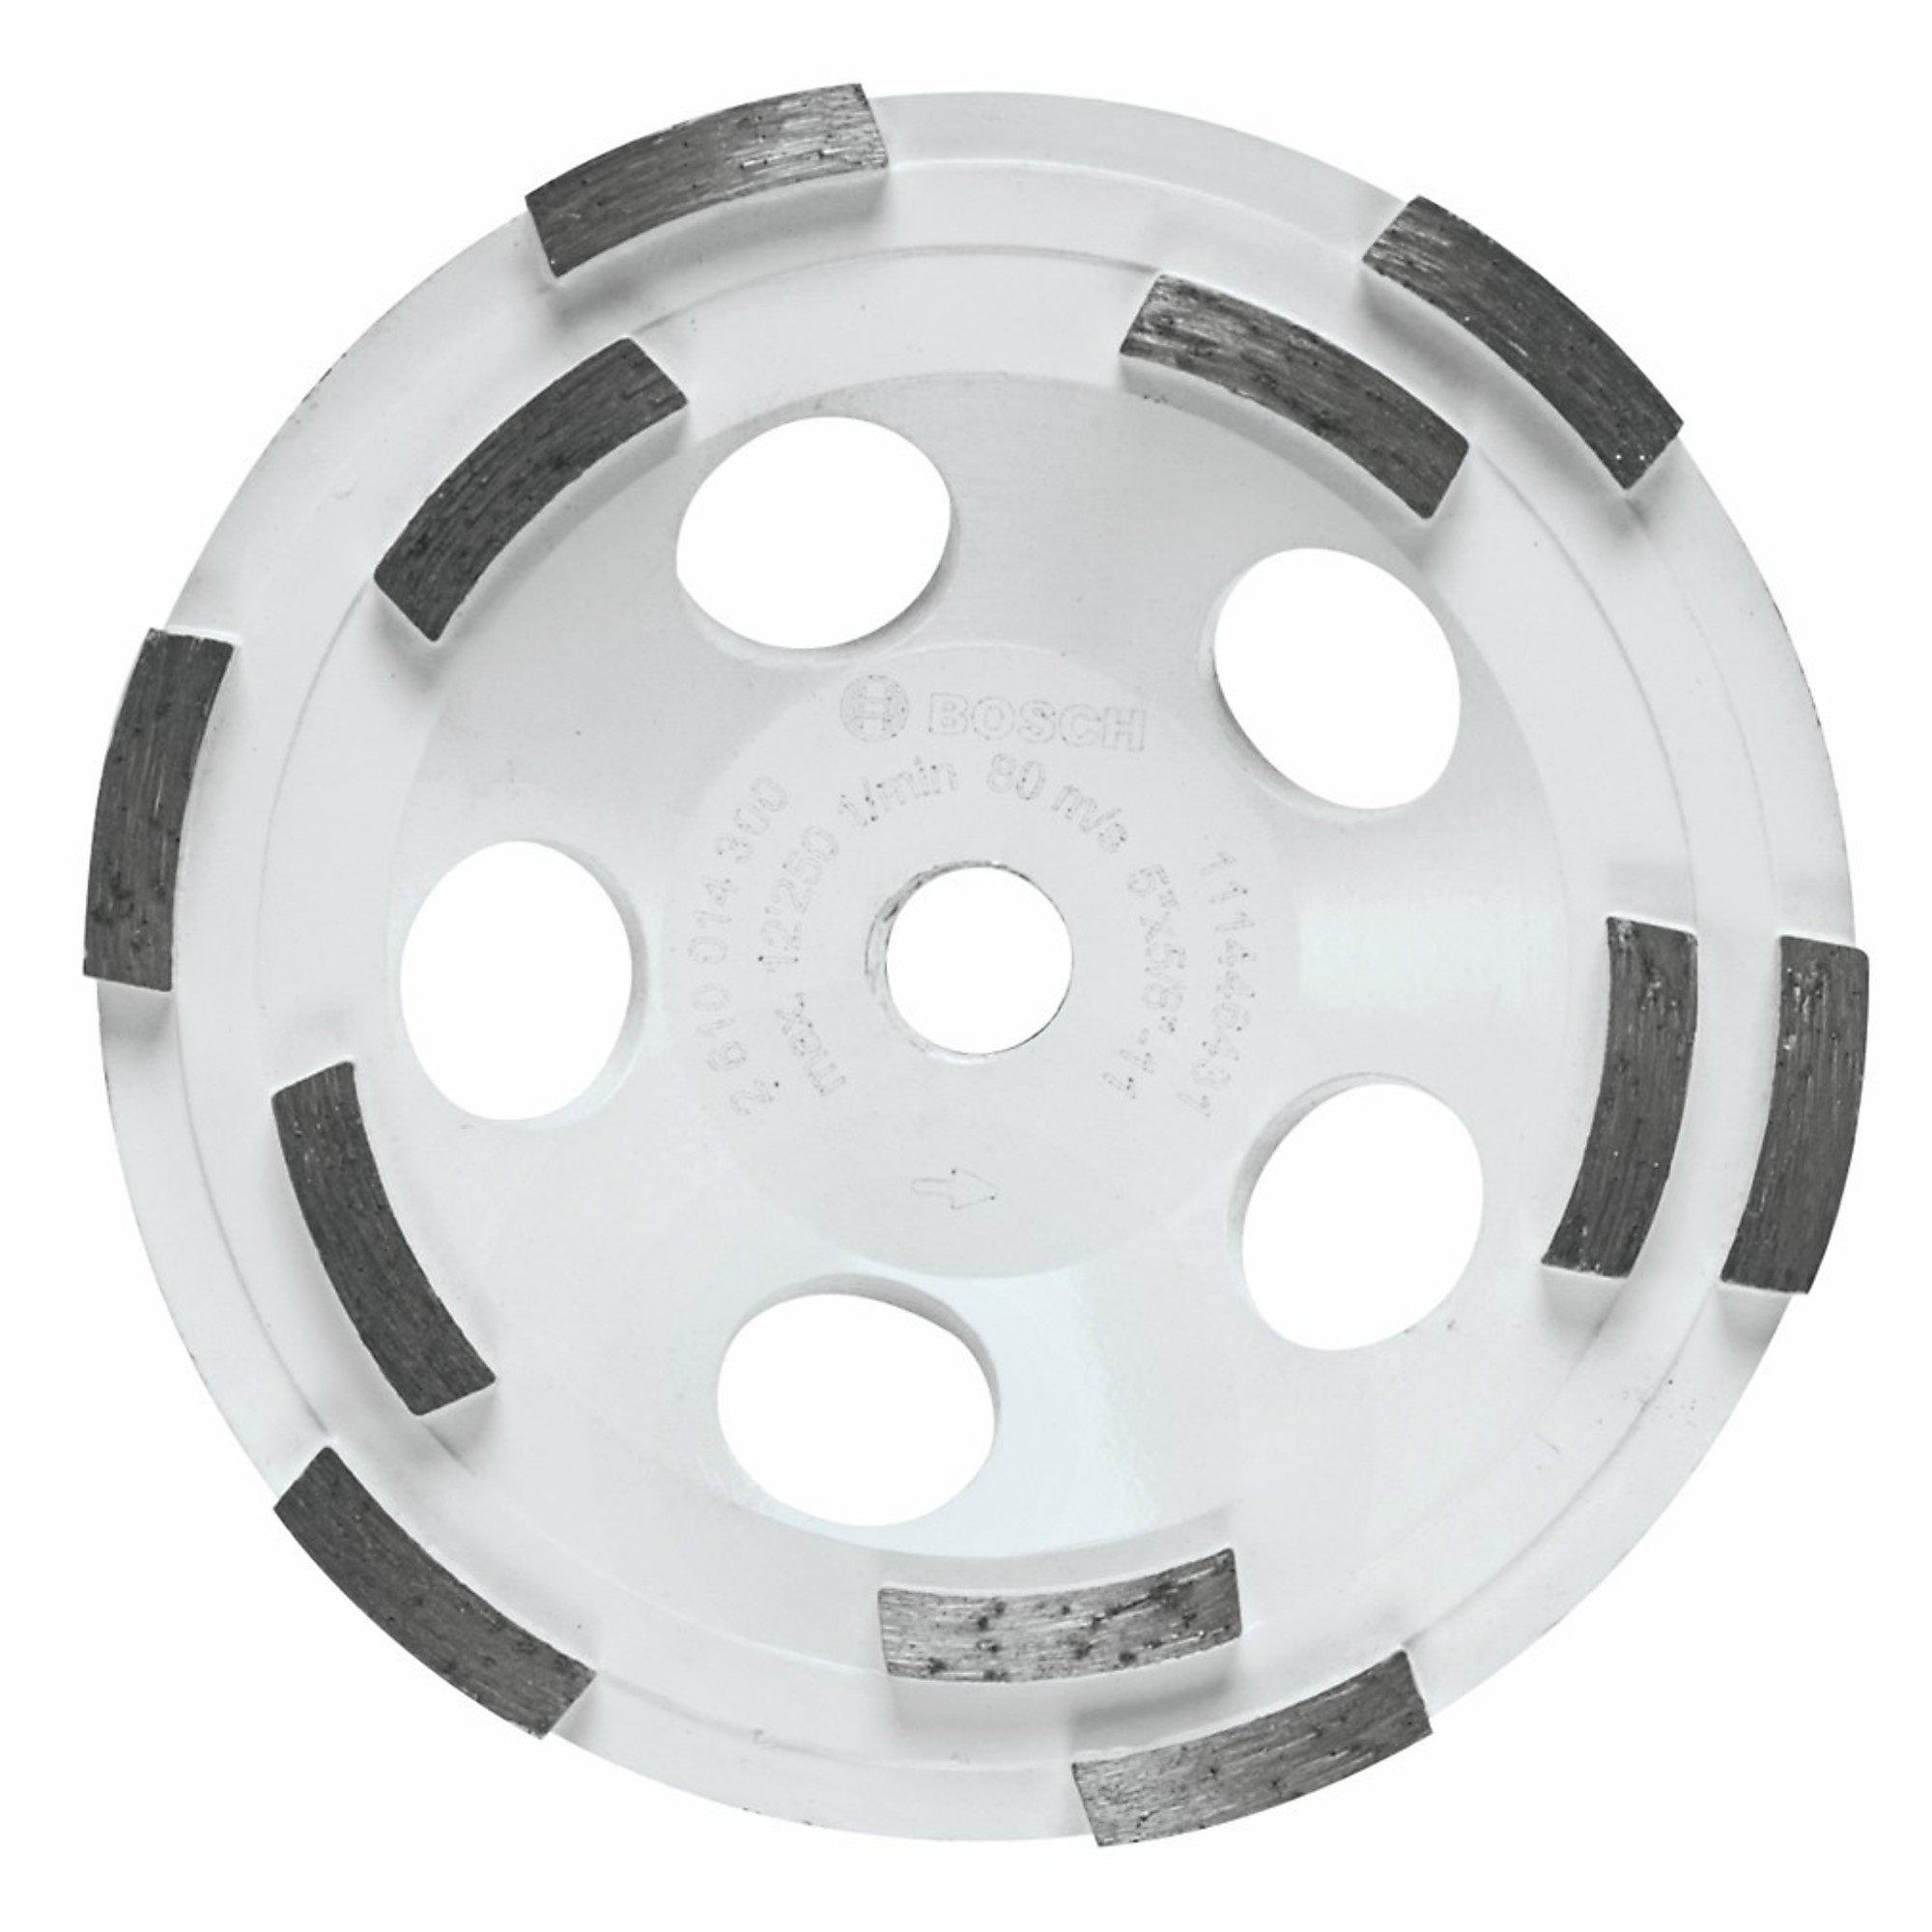 Bosch, 5Inch Segmented Diamond Cup Wh, Wheel Diameter 5 in, Arbor Size 5/8, Wheels (qty.) 1, Model DC510HD